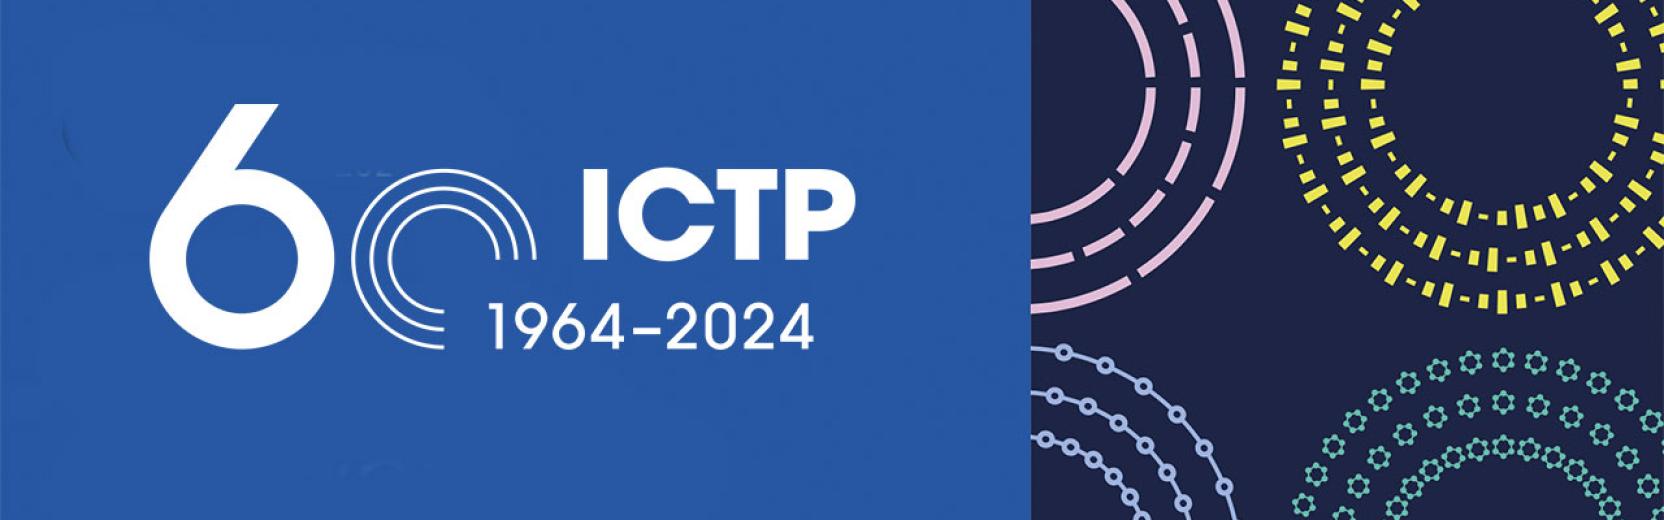 ICTP 60th